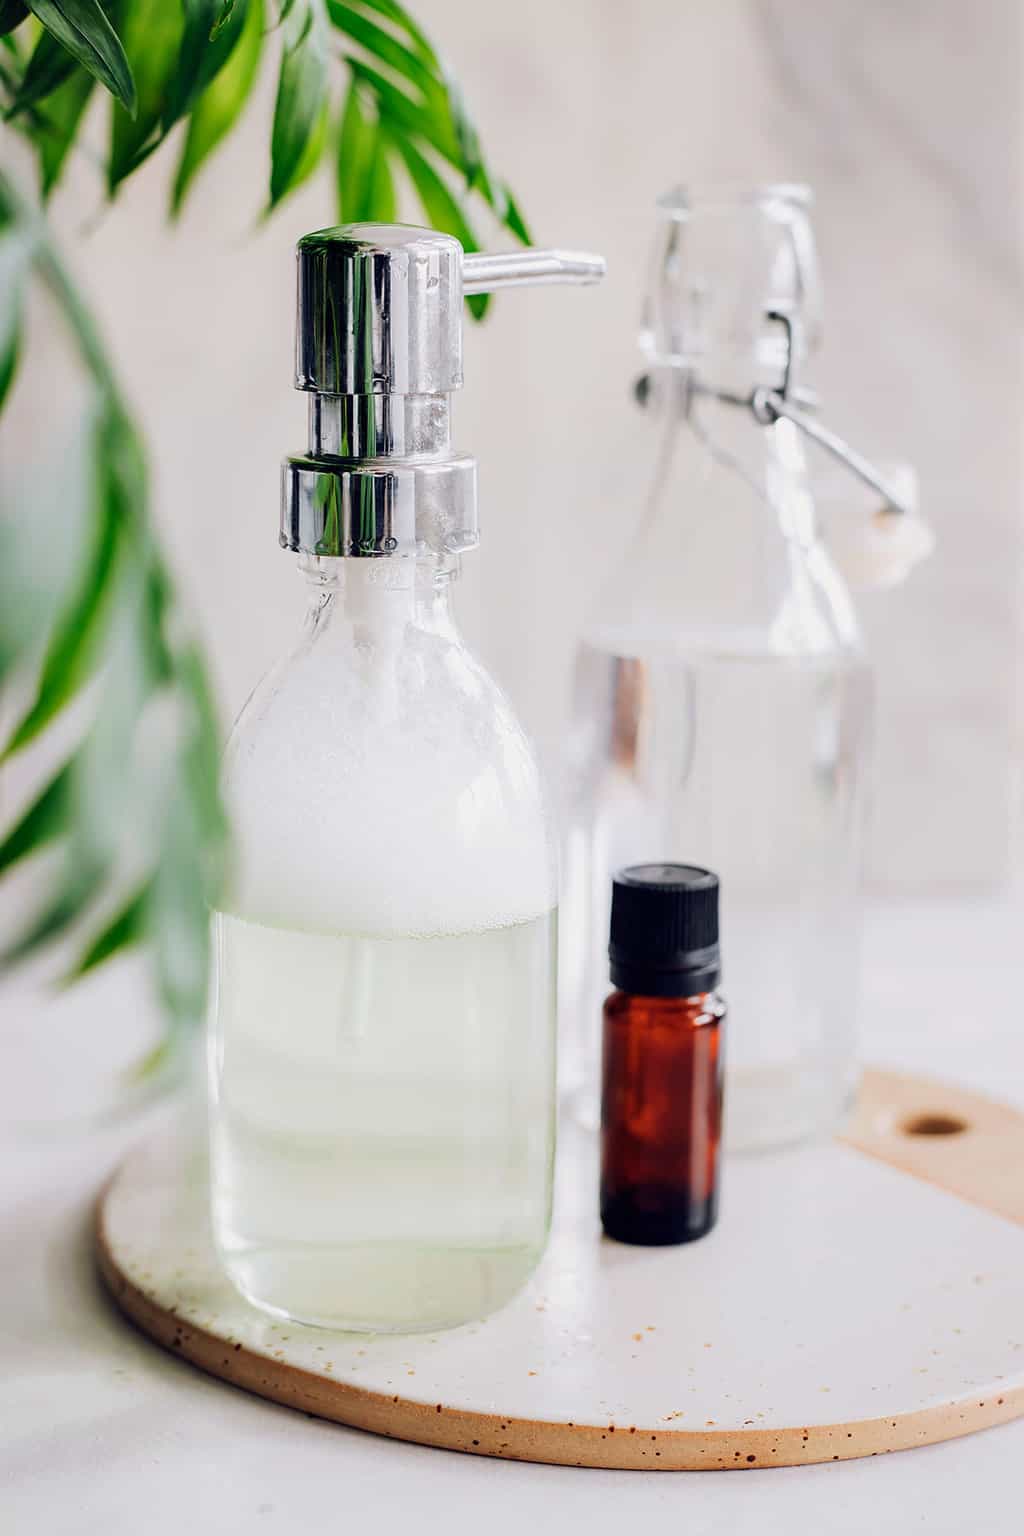 Homemade Shower Spray Recipe with White Vinegar, Dish Soap and Tea Tree Oil